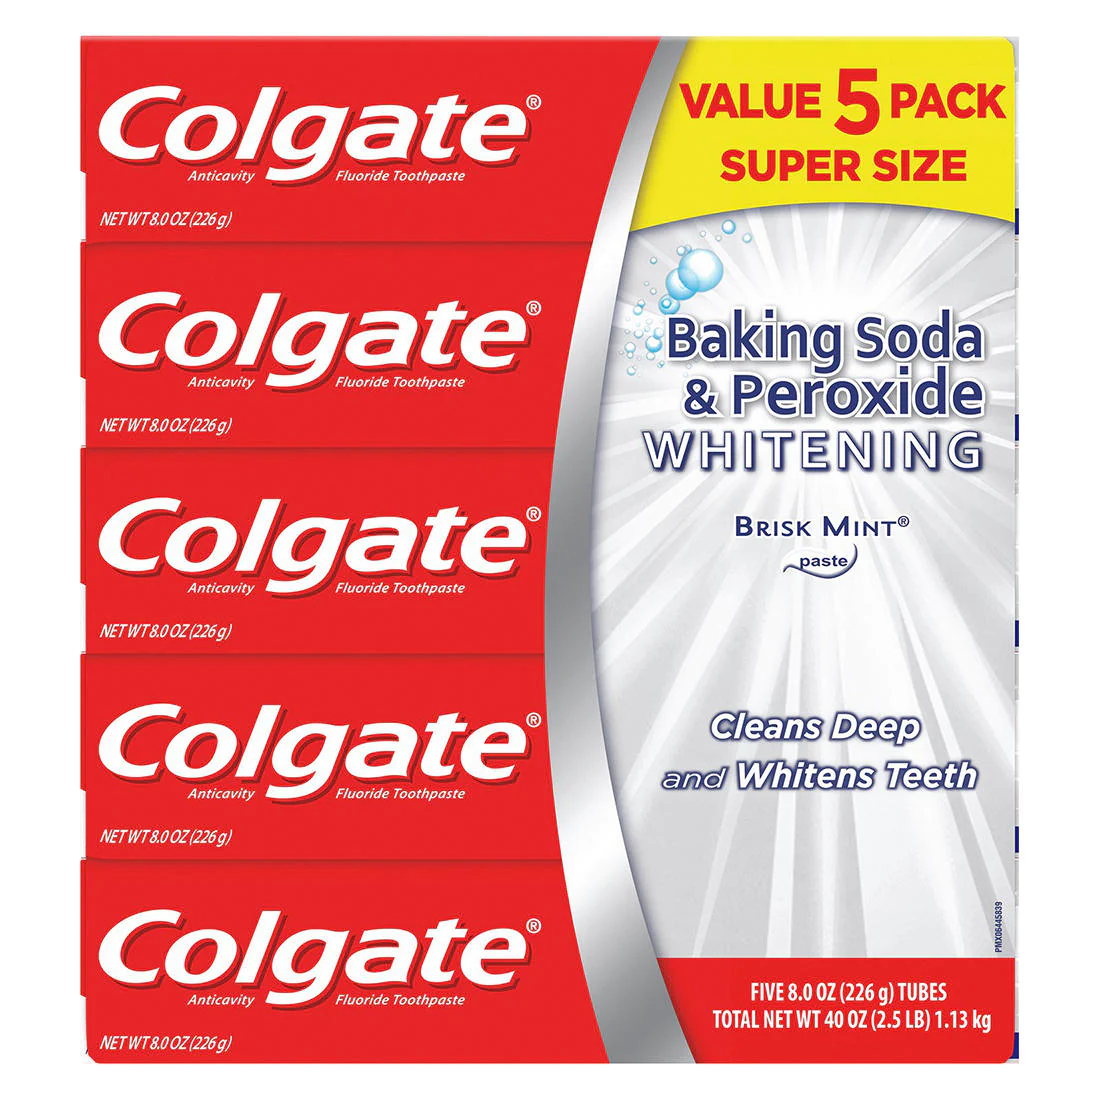 colgate toothpaste image